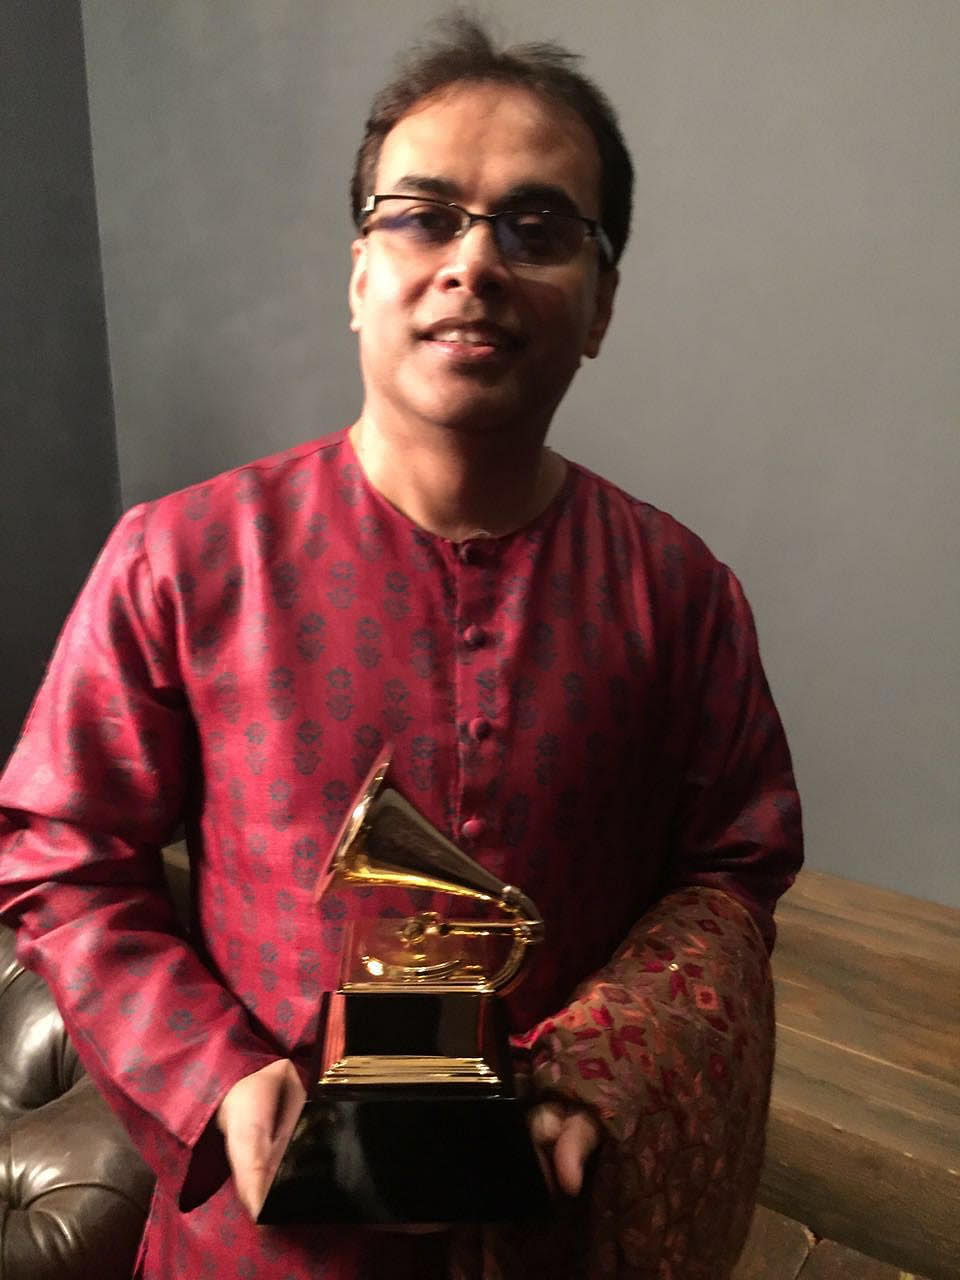  Tabla maestro Sandeep Das wins Best Global Music Grammy Award in Los Angeles.